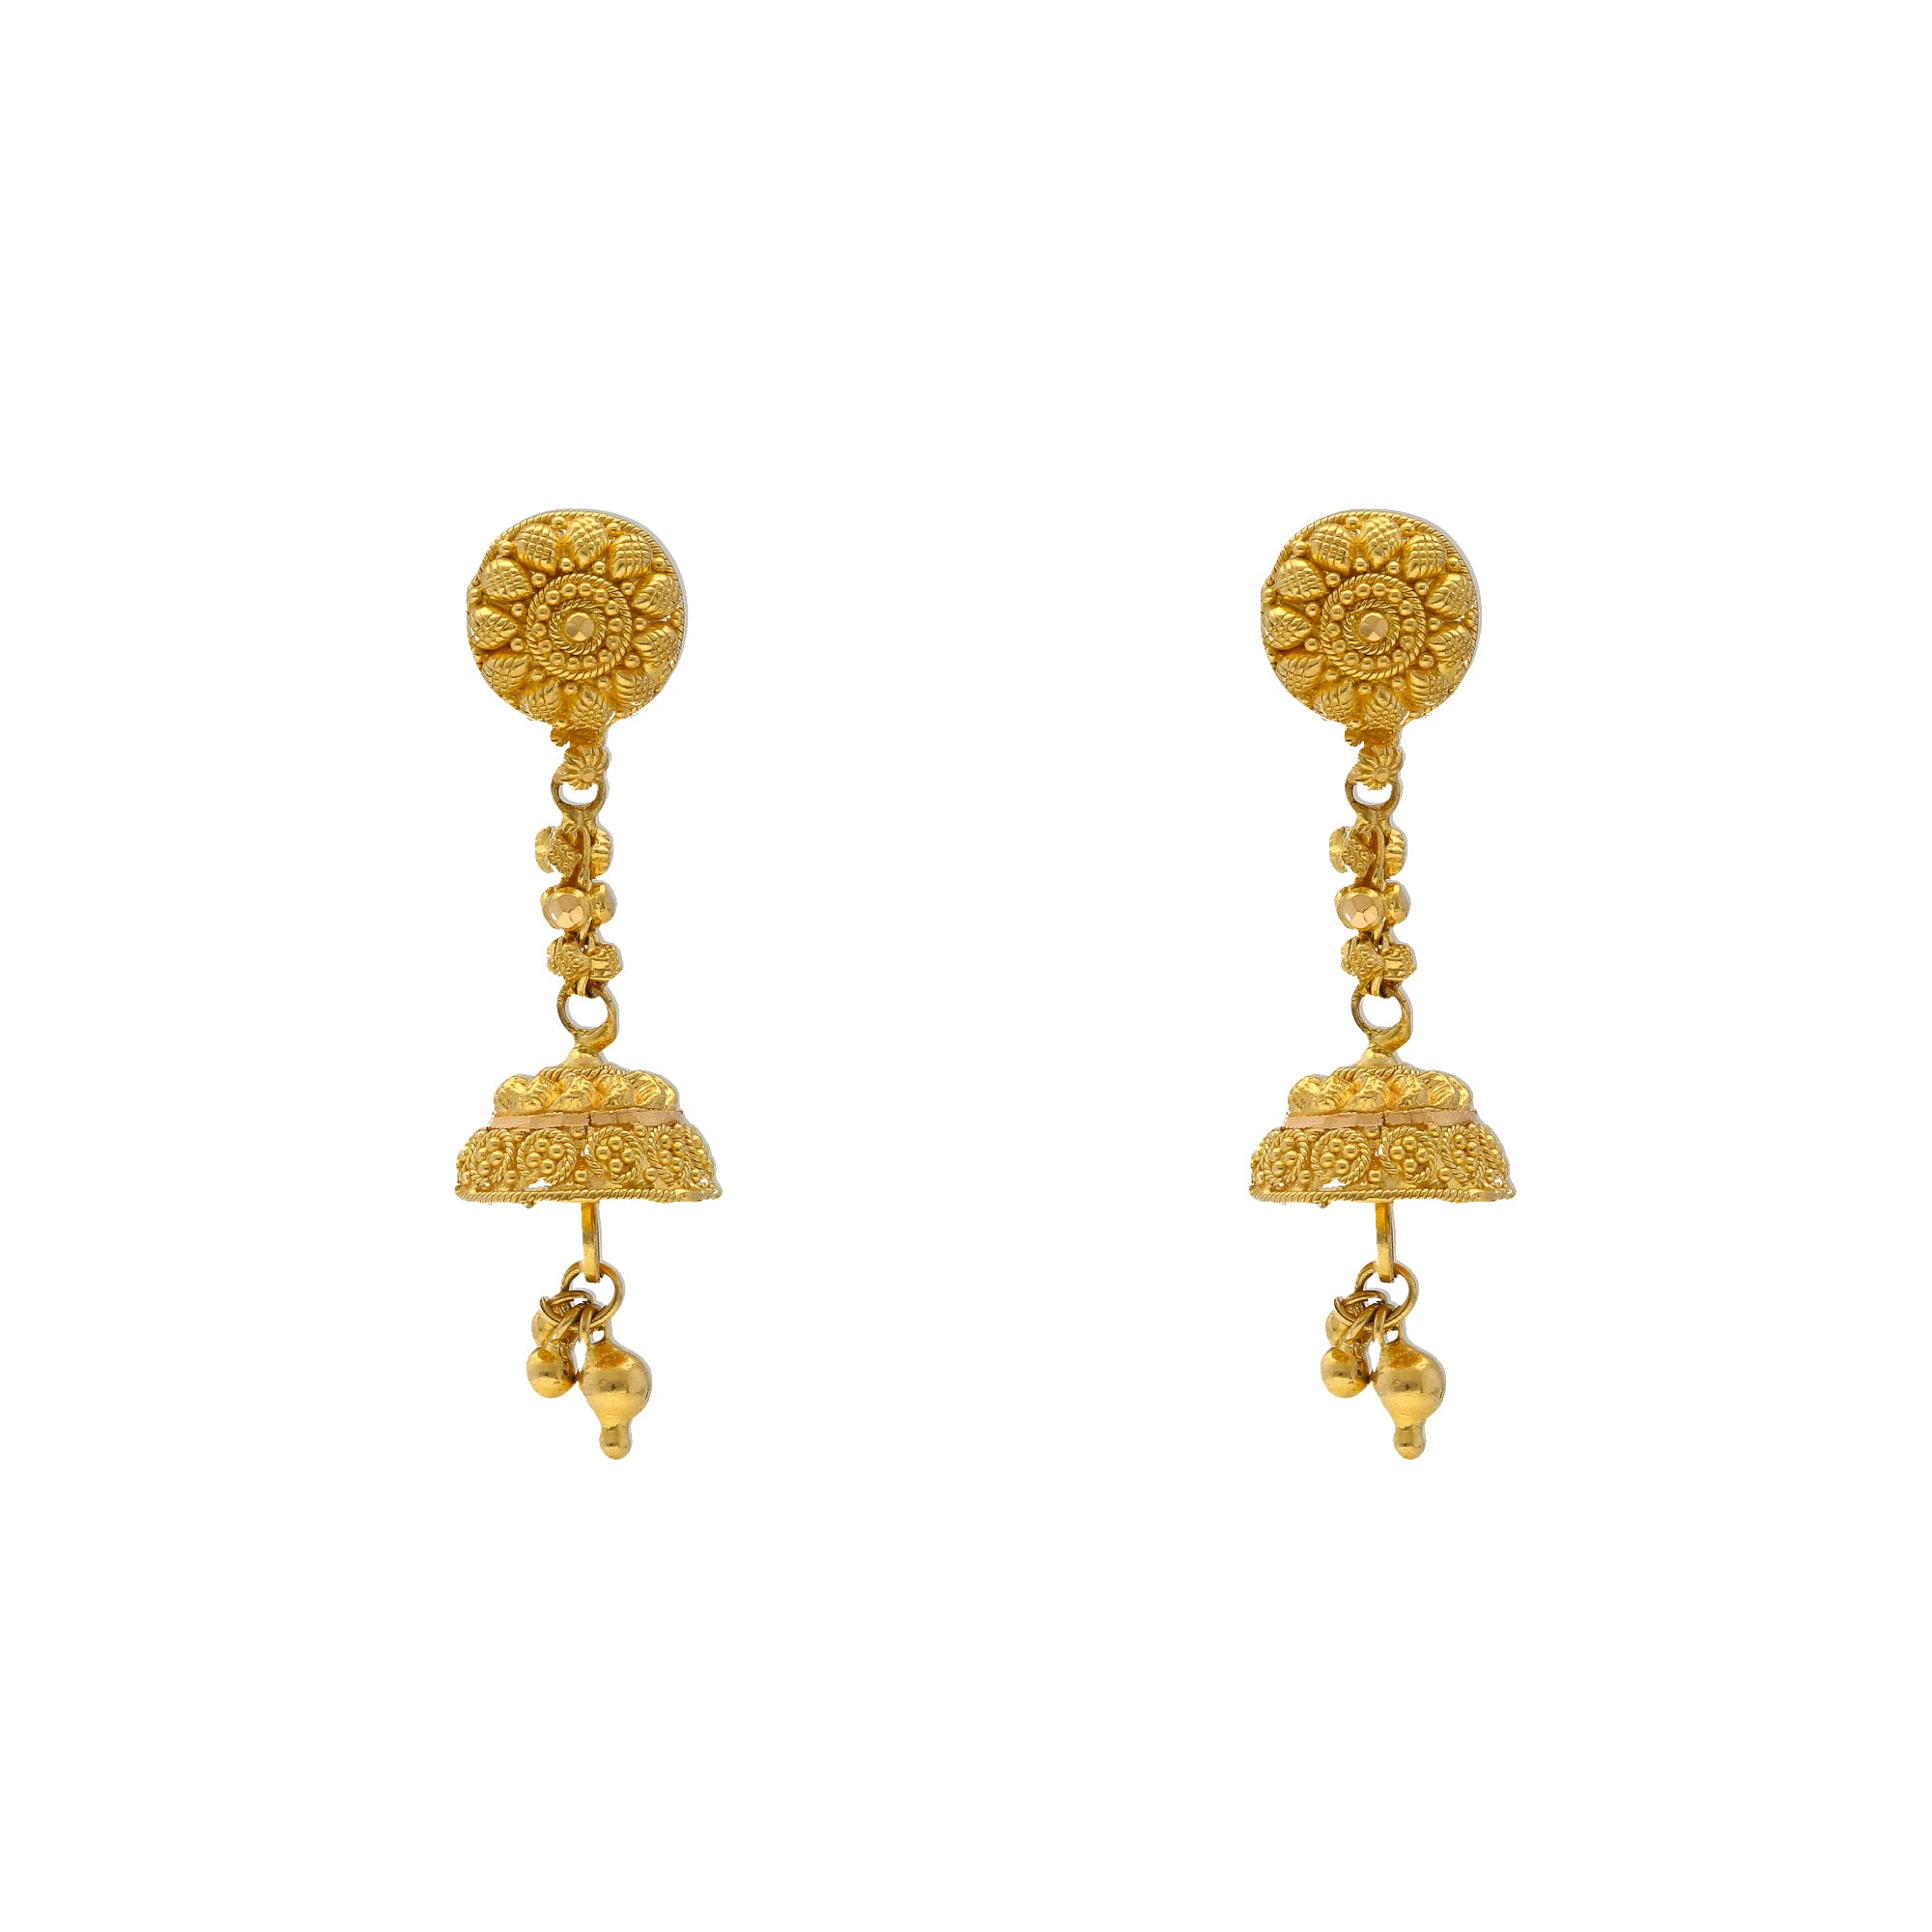 22K Gold Hoop Earrings - Jhumkas (Buttalu) - Gold Dangle Earrings With  Color Stones (Temple Jewellery) - 235-GJH2475 in 14.600 Grams